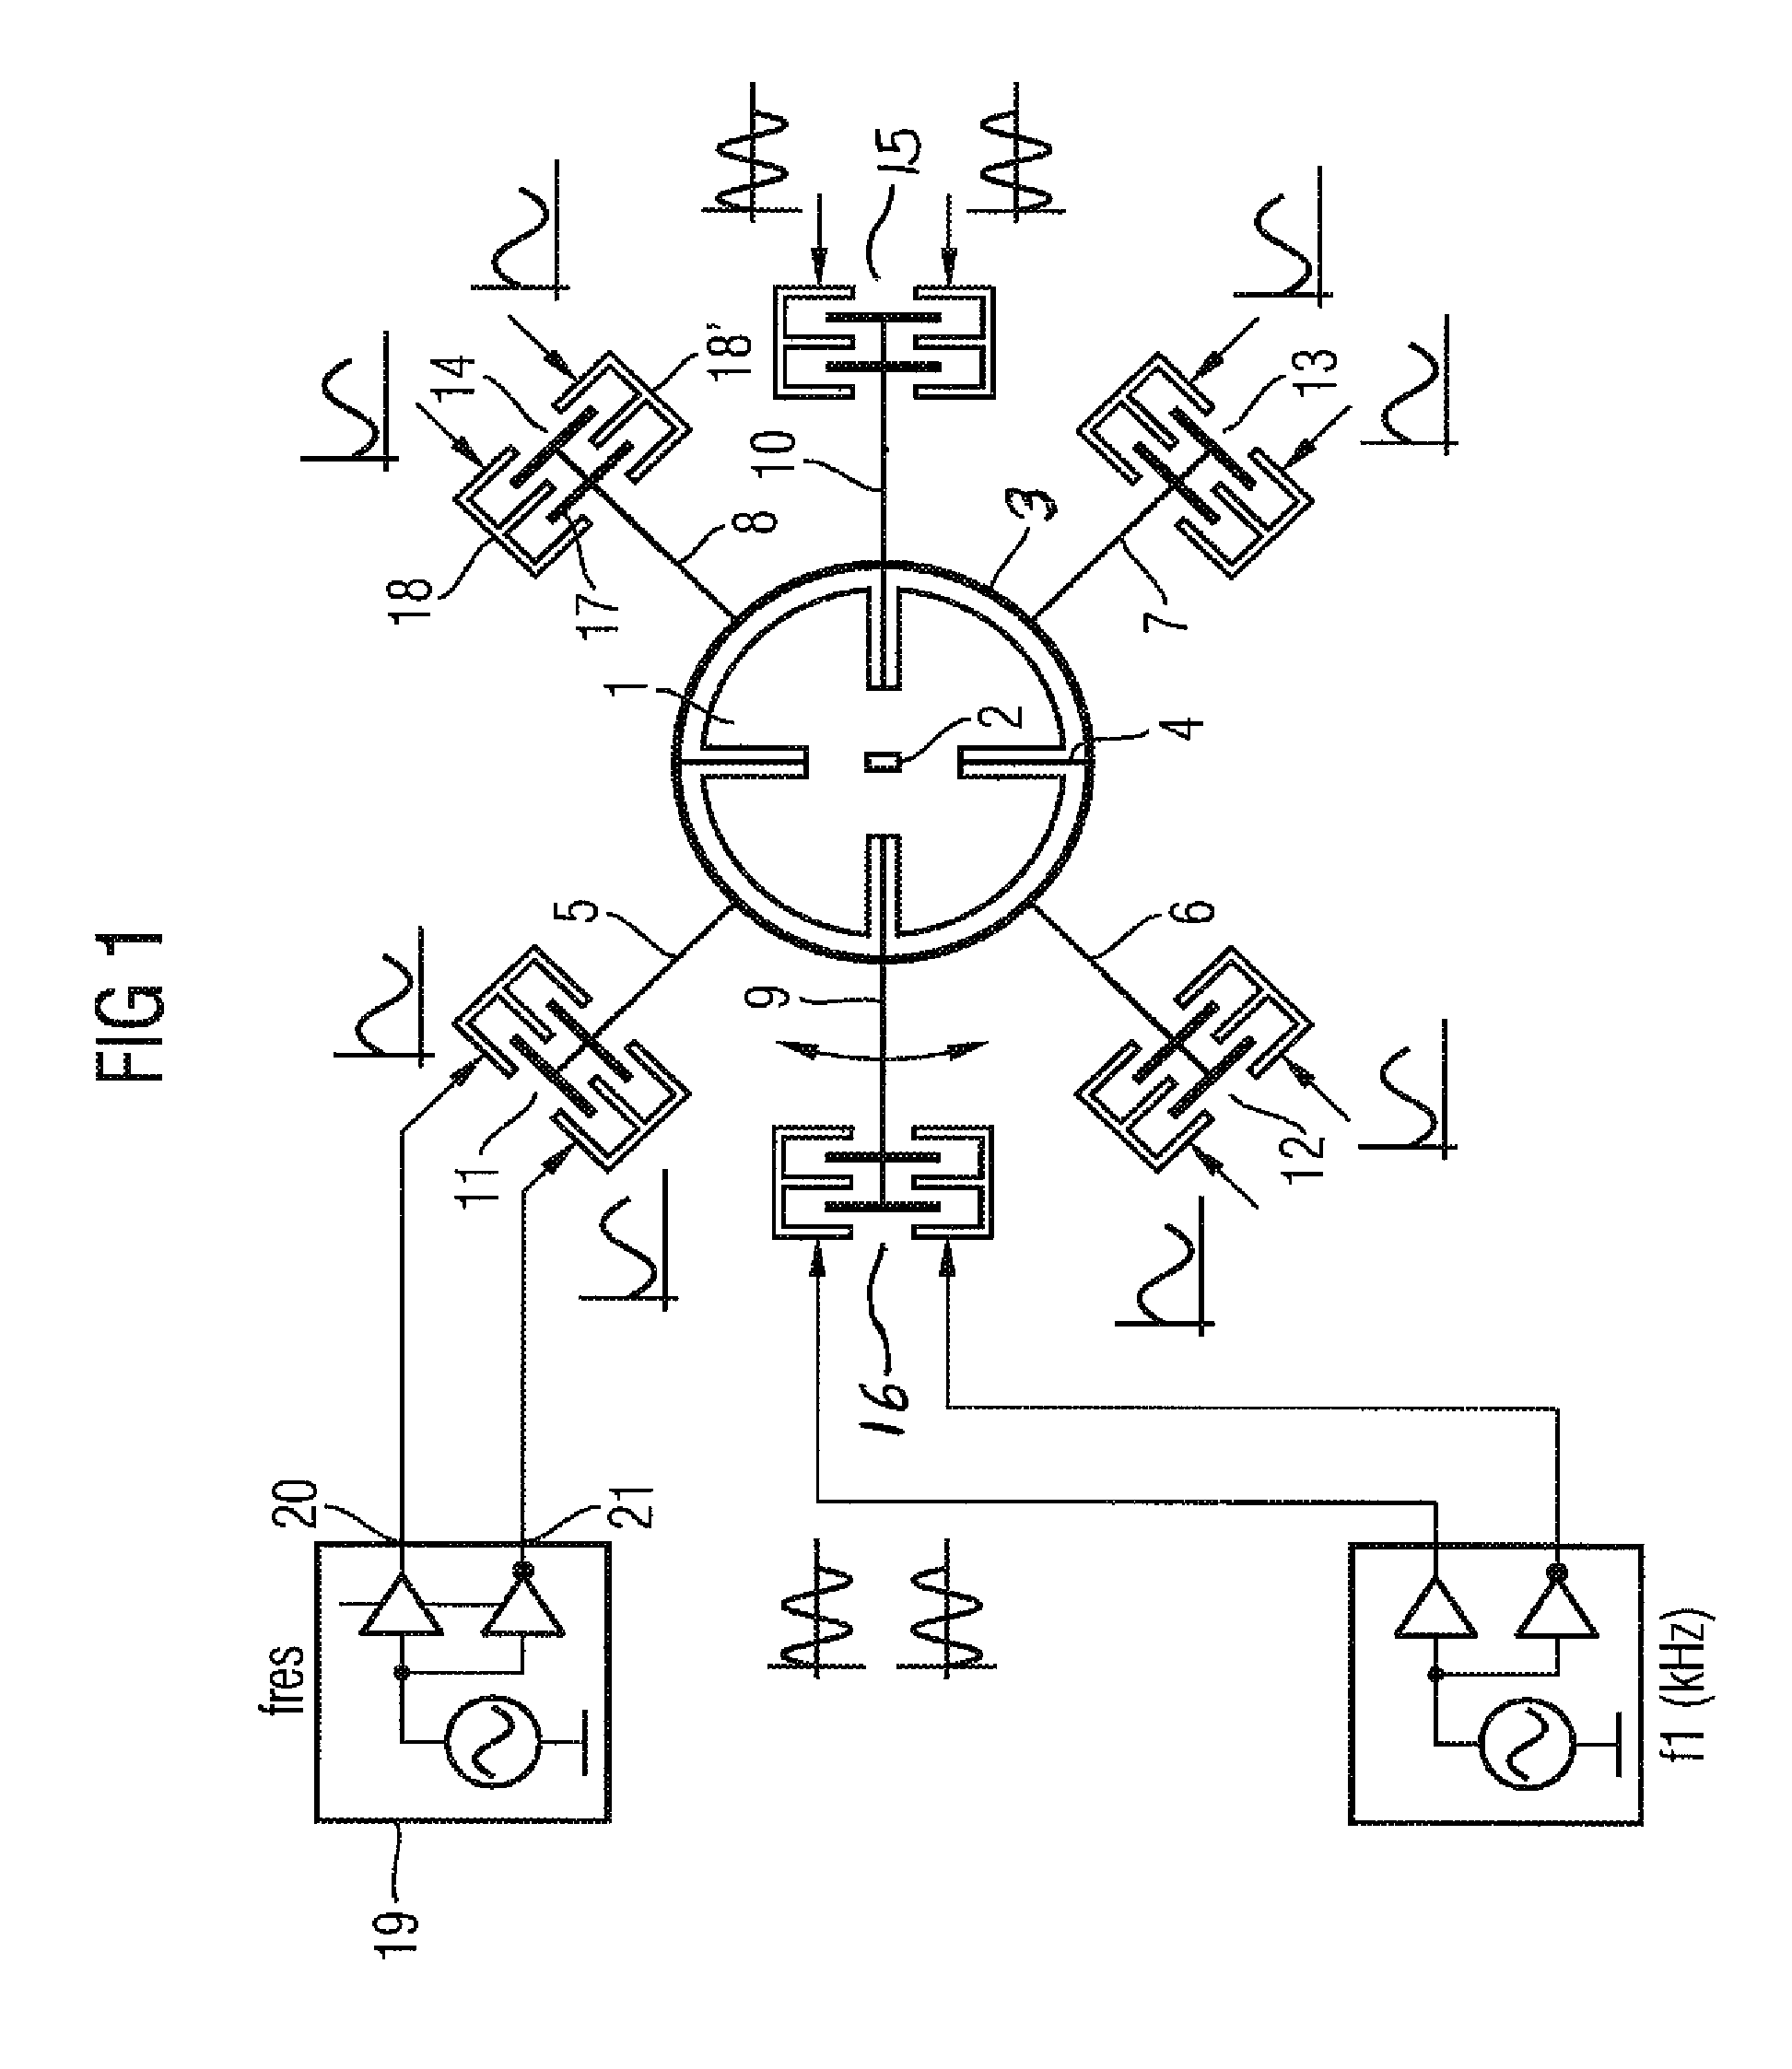 Arrangement for measuring a rate of rotation using a vibration sensor